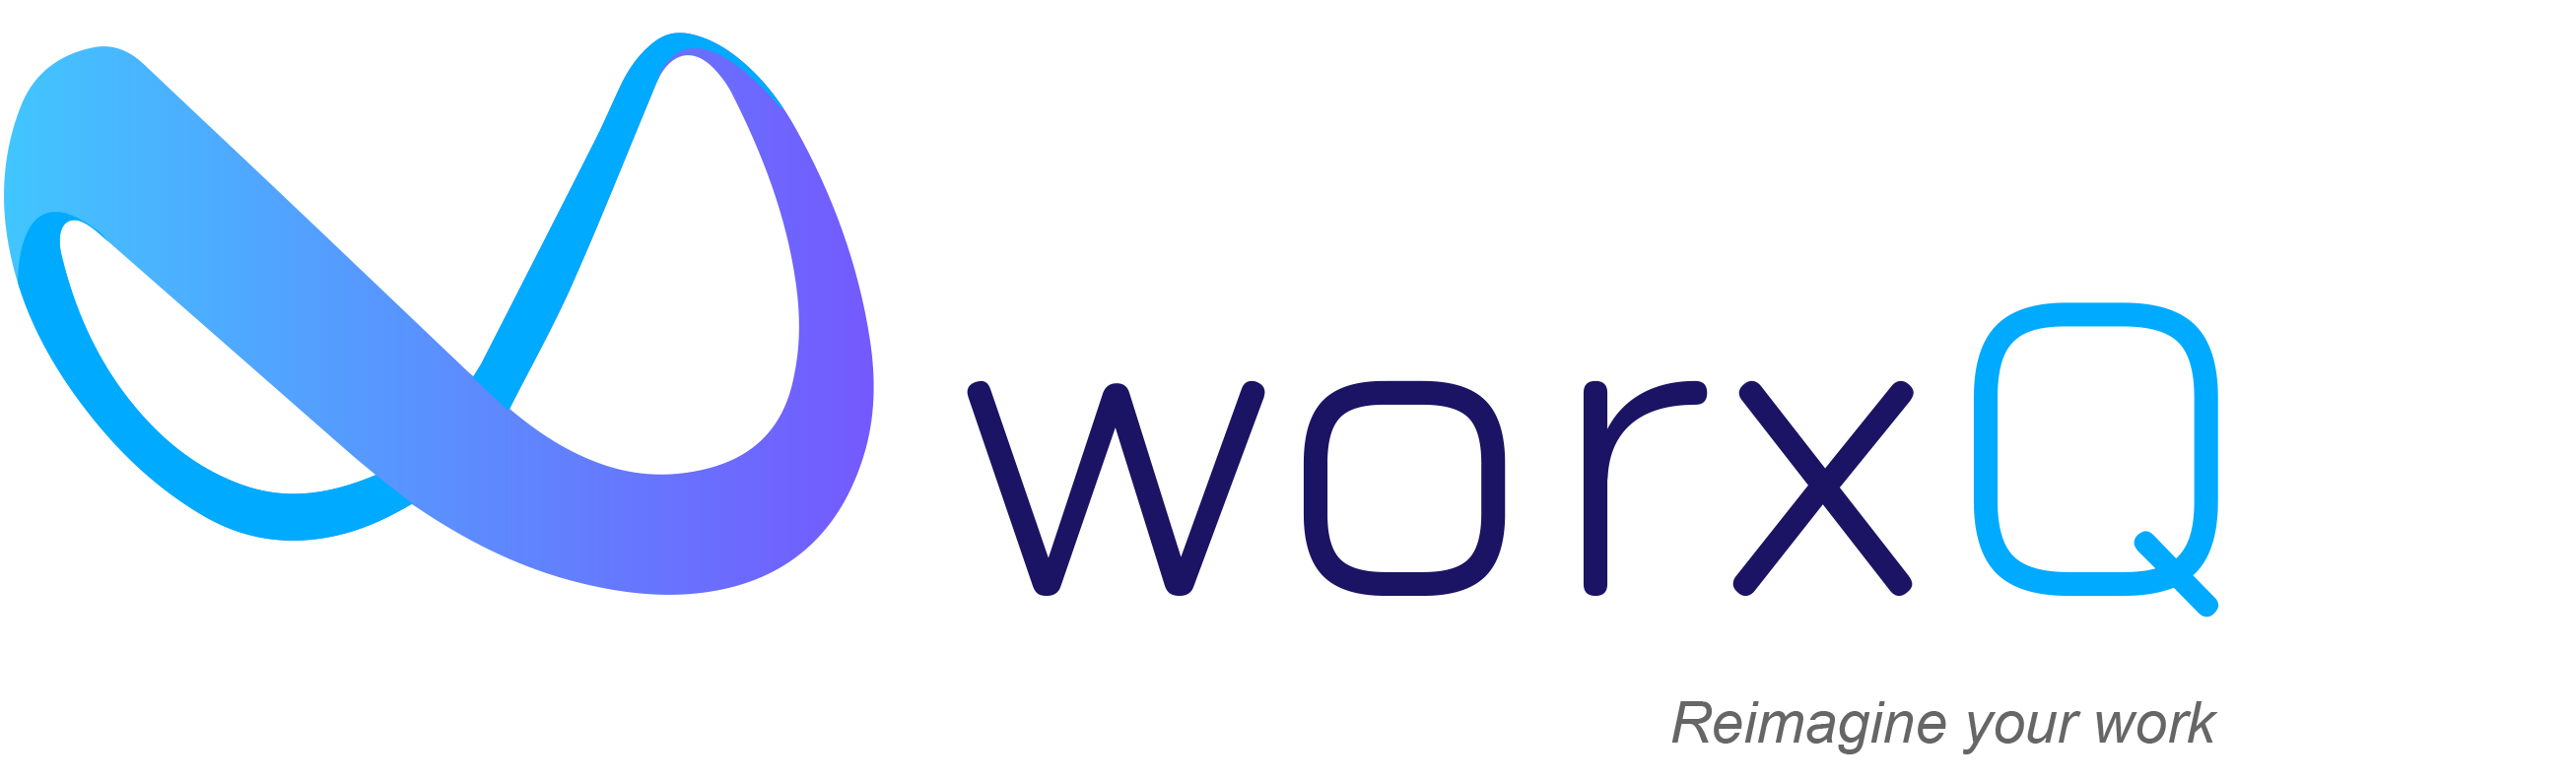 Time off Management Software - Worxq